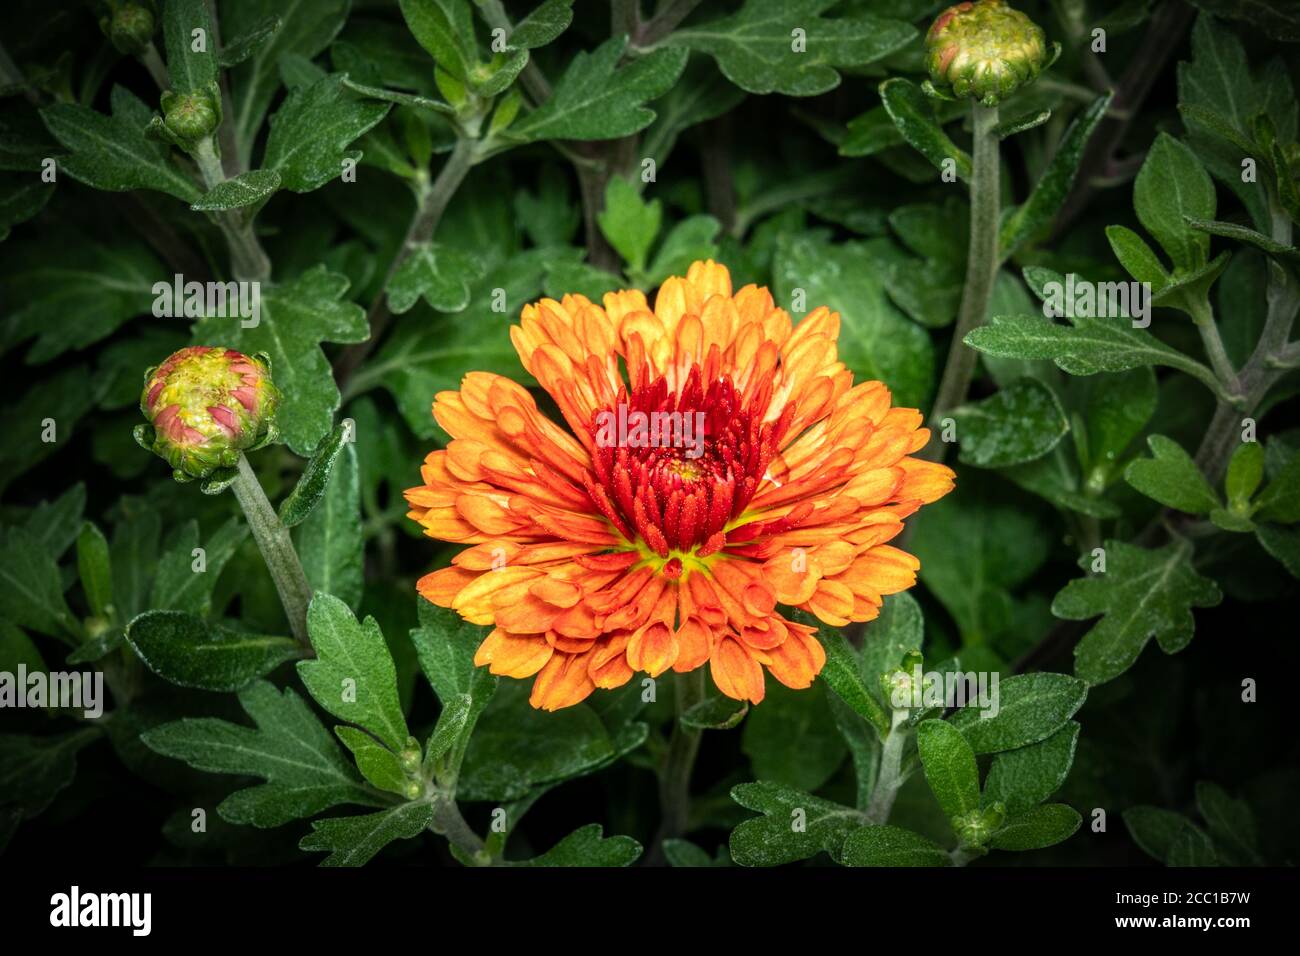 Chrysanthemum Orange (Asteraceae) Close-up view Stock Photo